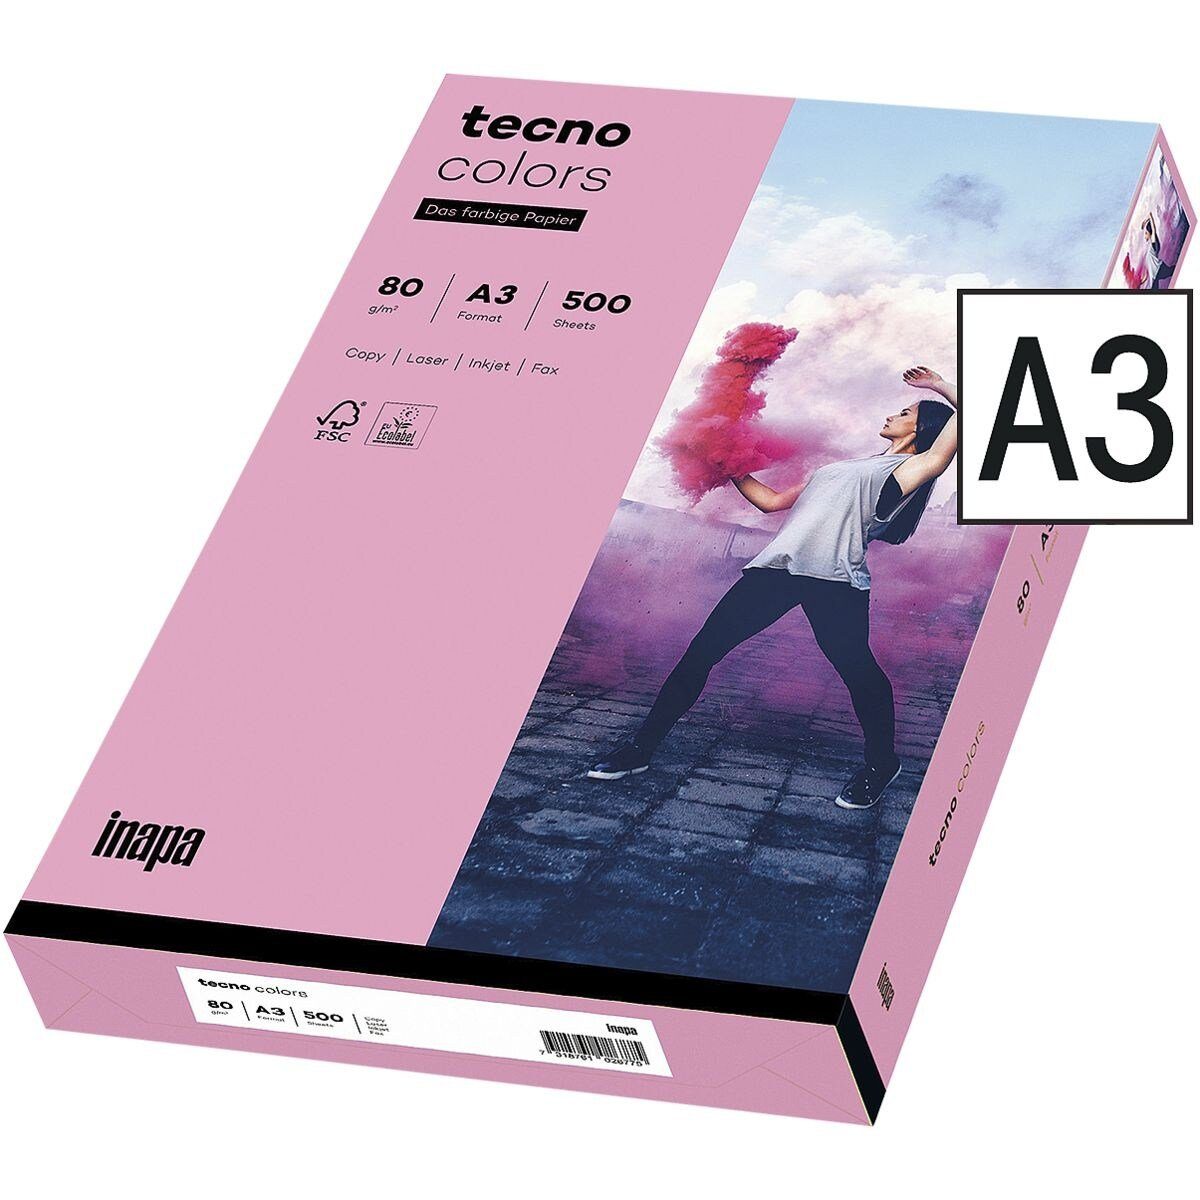 Inapa tecno Drucker- und Kopierpapier Rainbow / tecno Colors, Pastellfarben, Format DIN A3, 80 g/m², 500 Blatt rosa